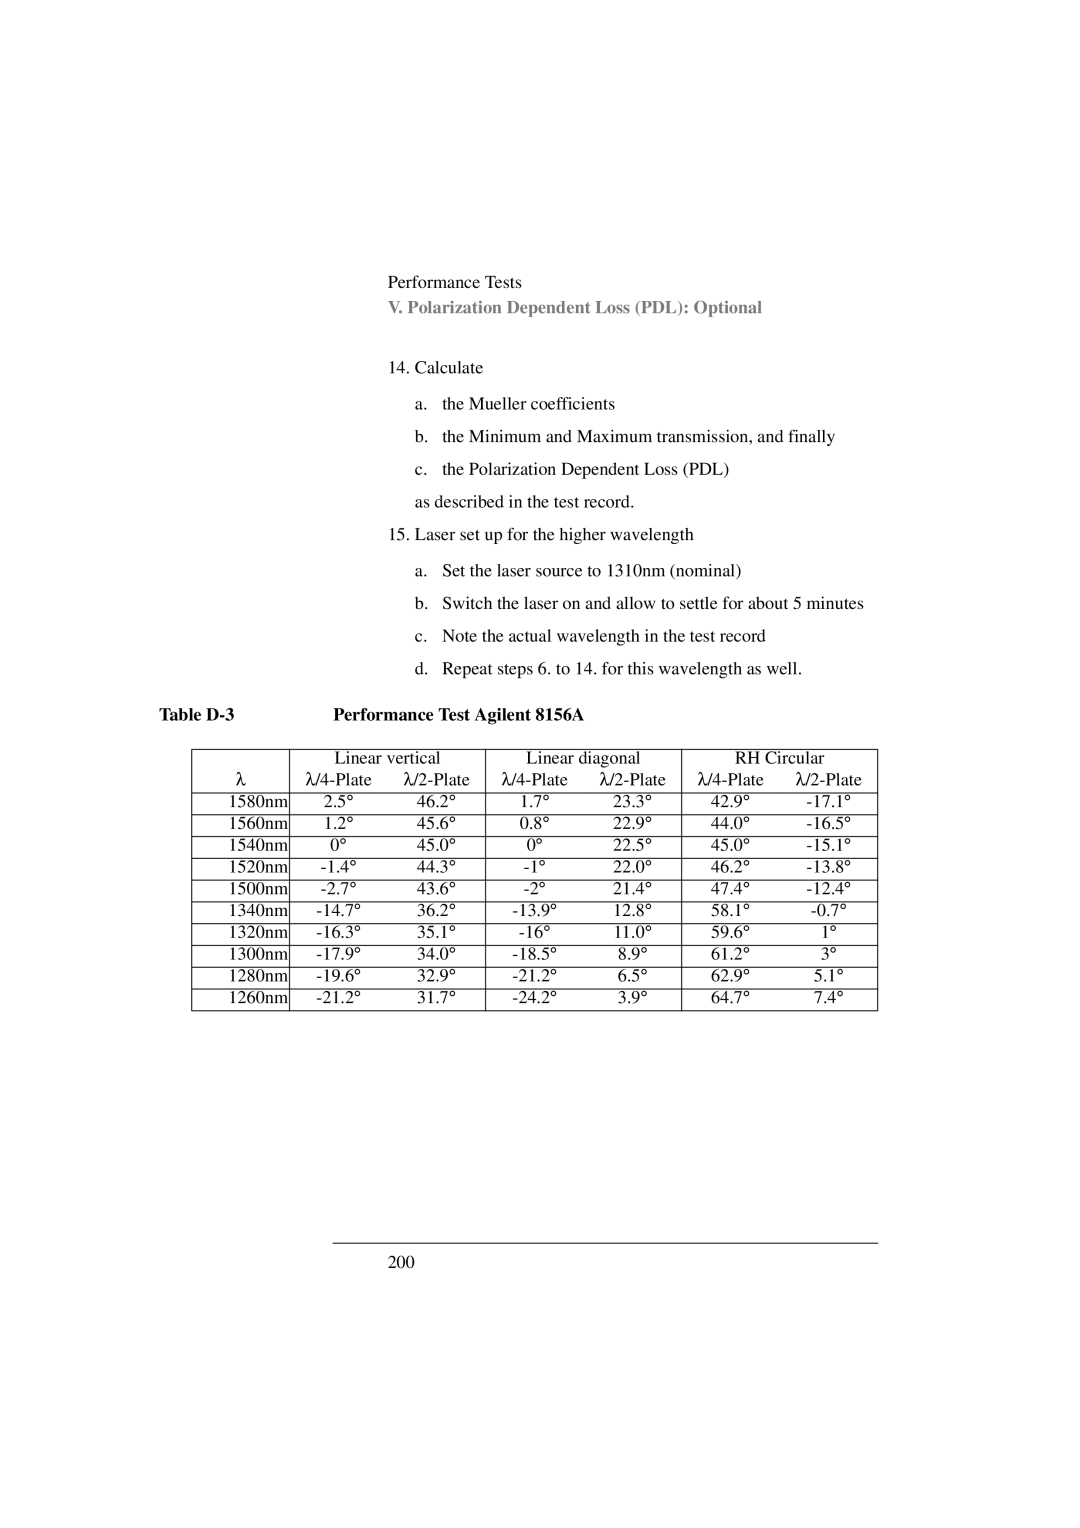 Agilent Technologies manual Table D-3 Performance Test Agilent 8156A 